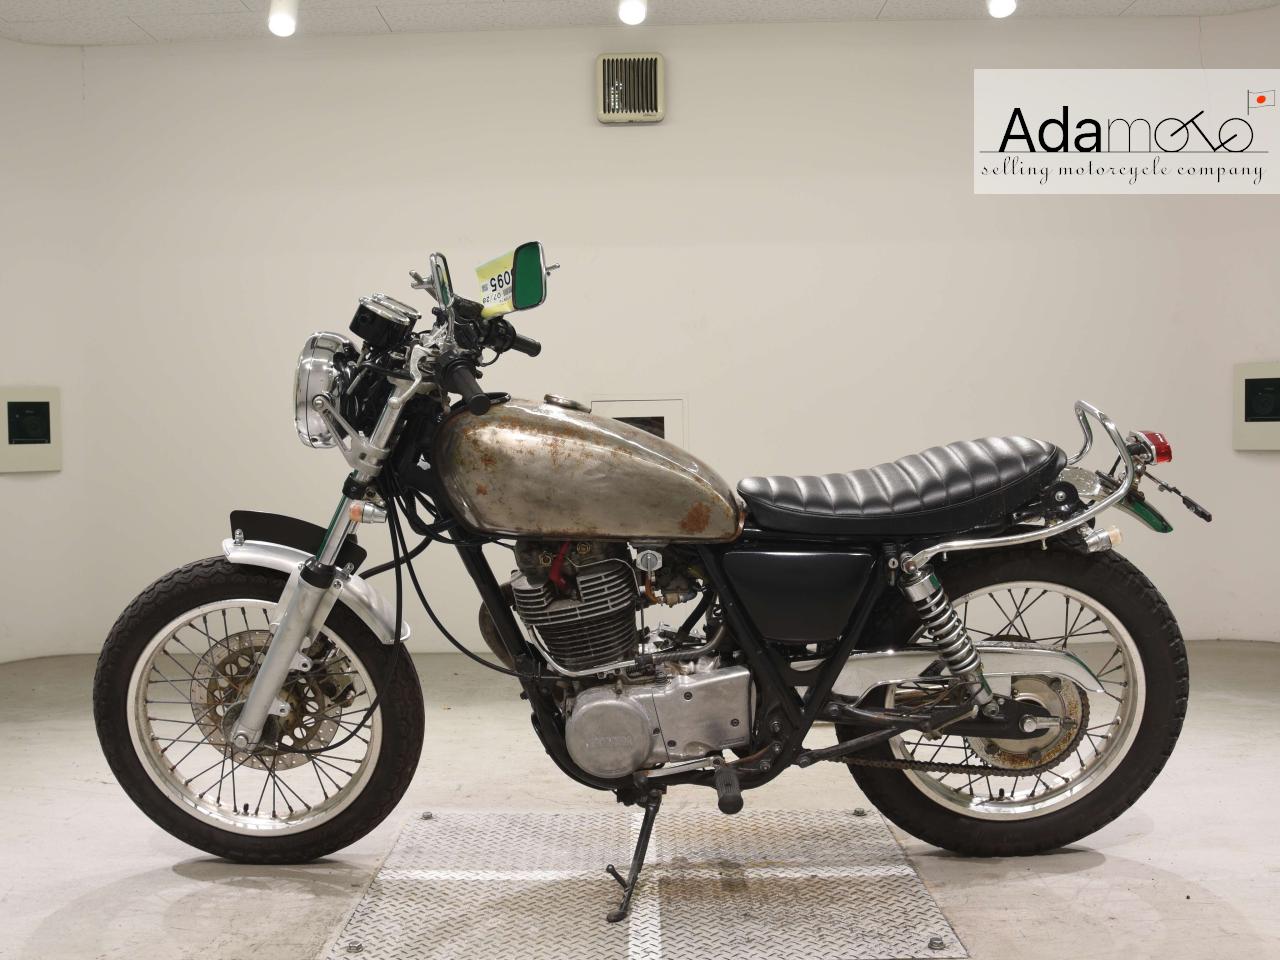 Yamaha SR400 3 - Adamoto - Motorcycles from Japan